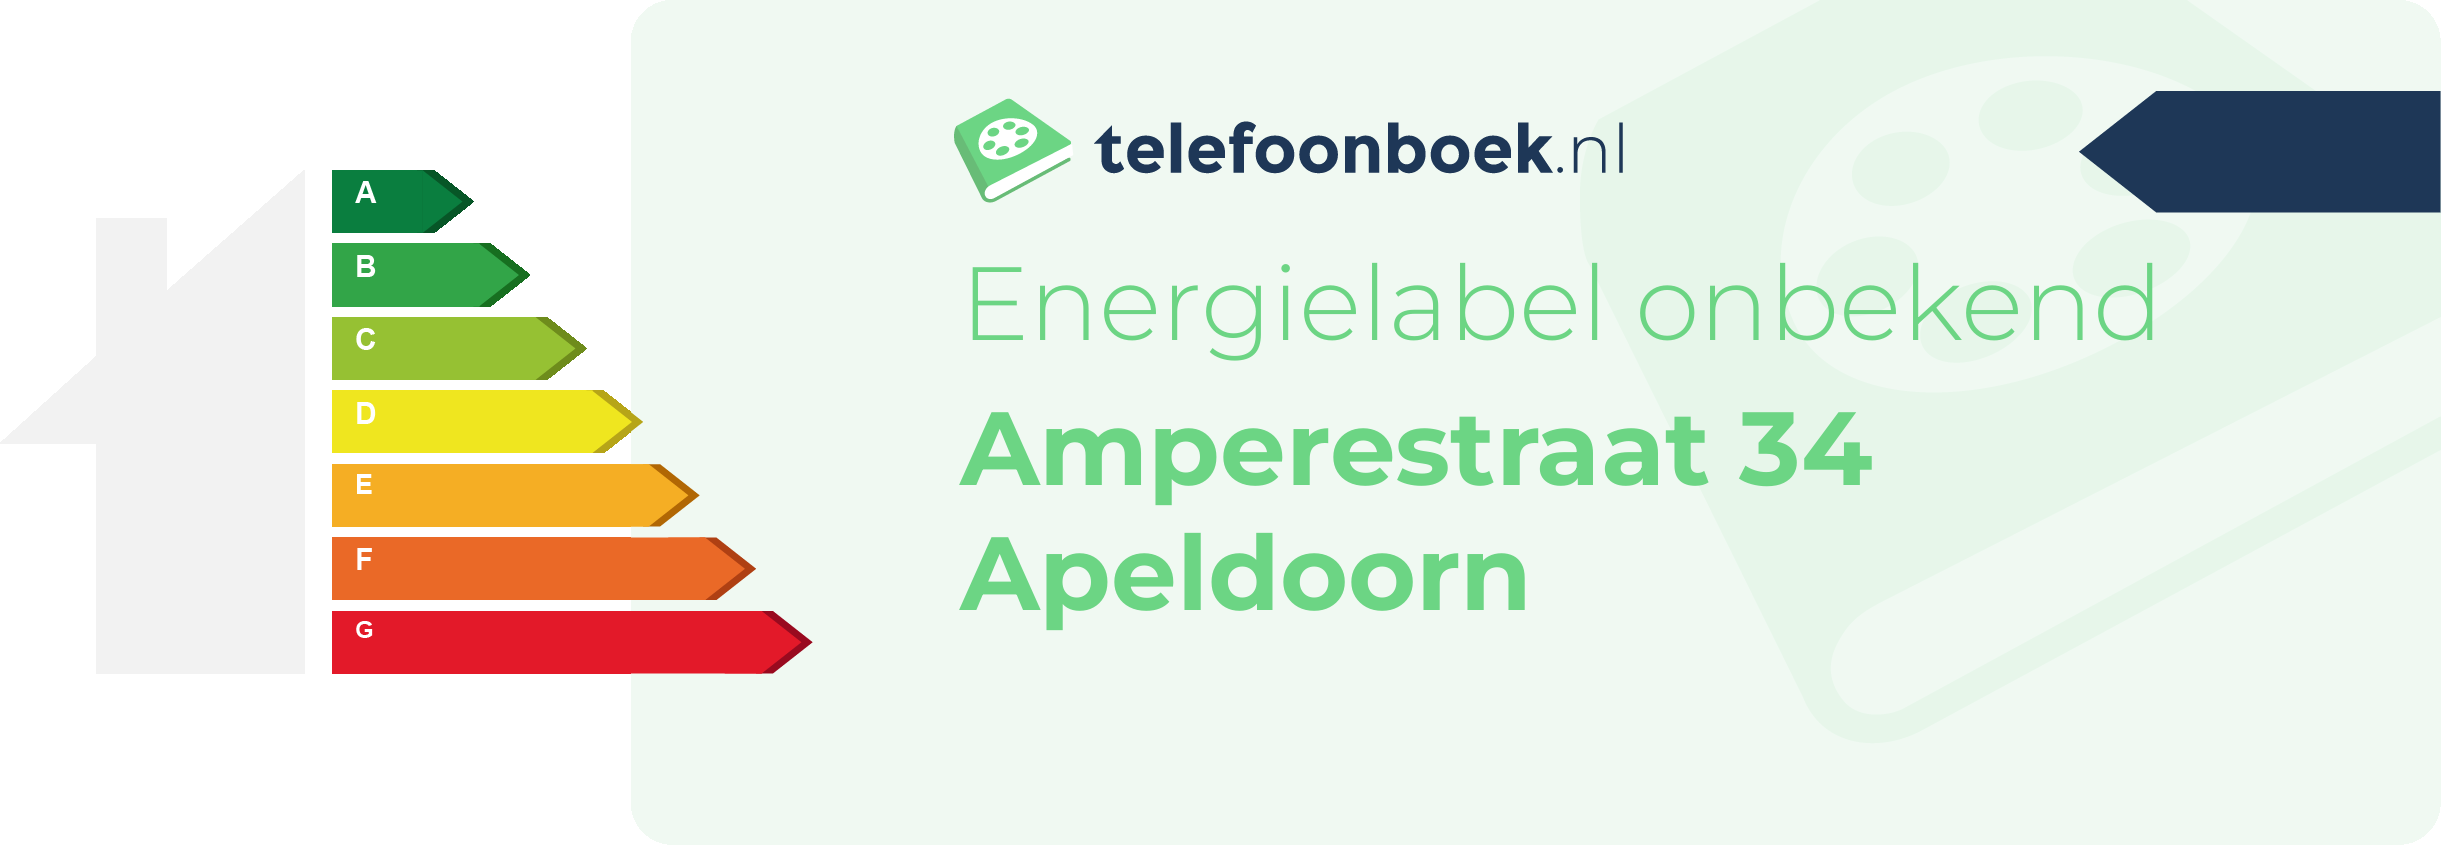 Energielabel Amperestraat 34 Apeldoorn